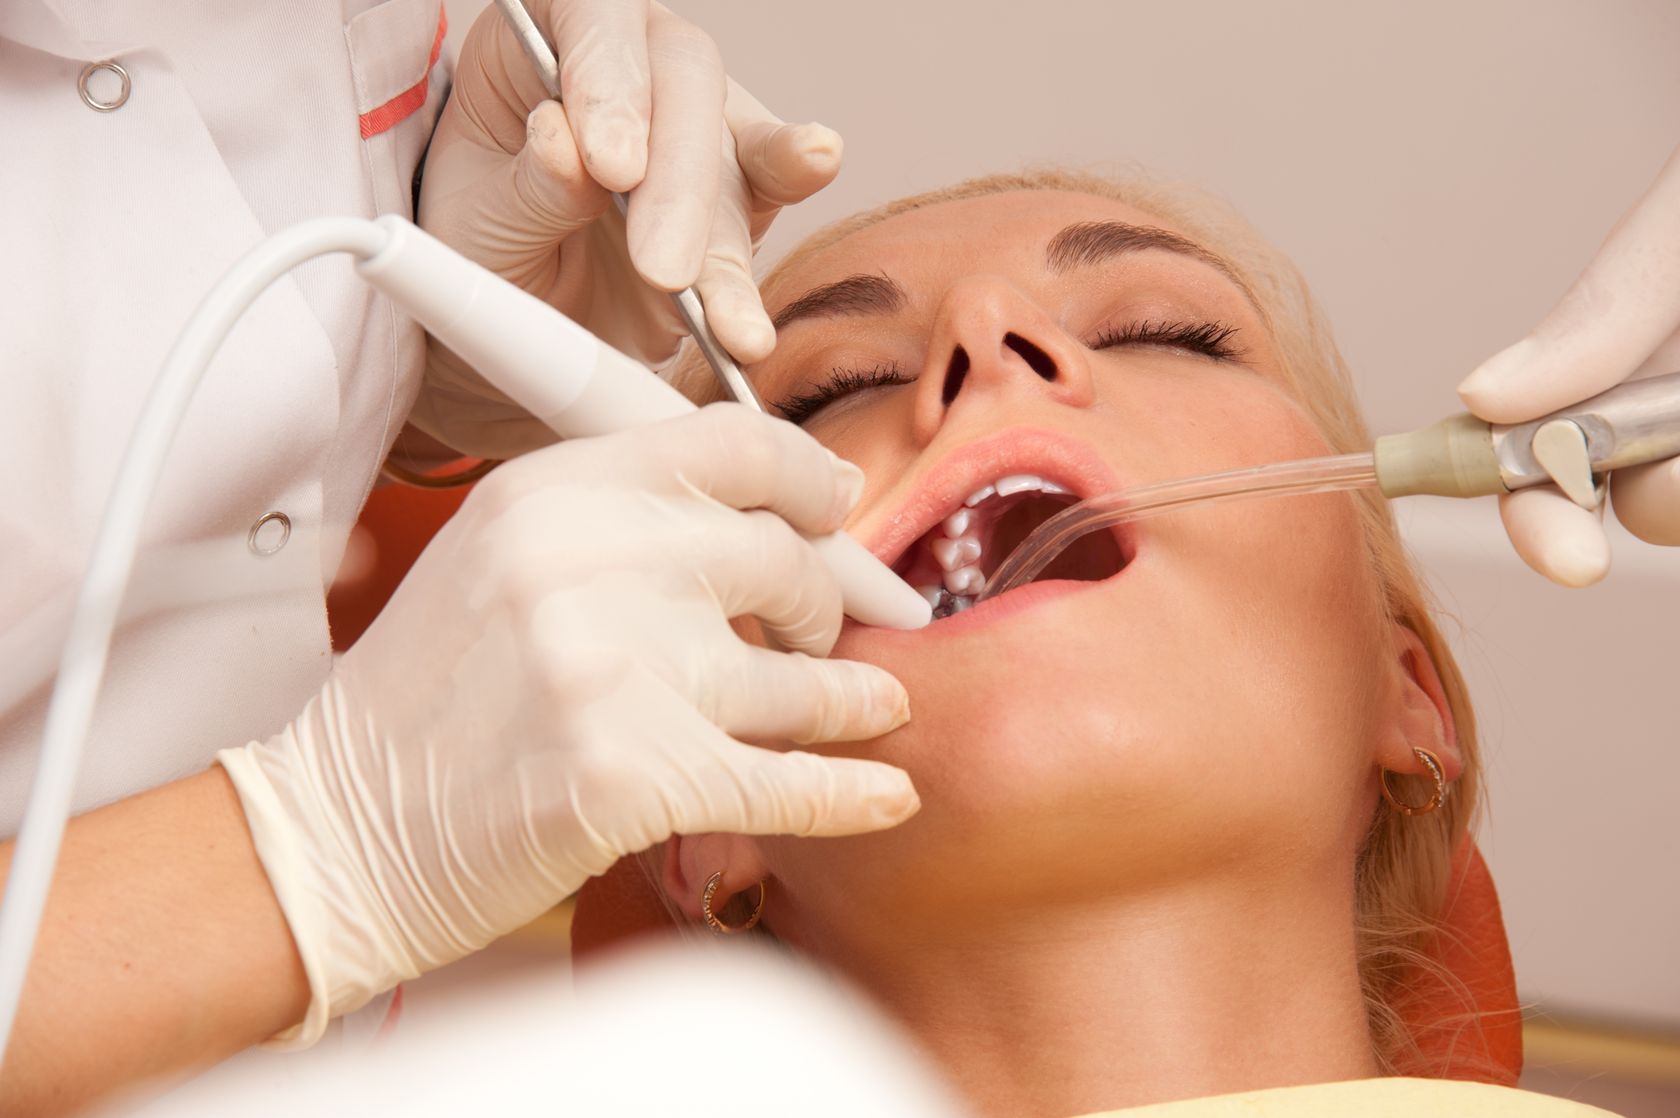 Sedation Dentistry in Monroe, LA Ensures Your Comfort